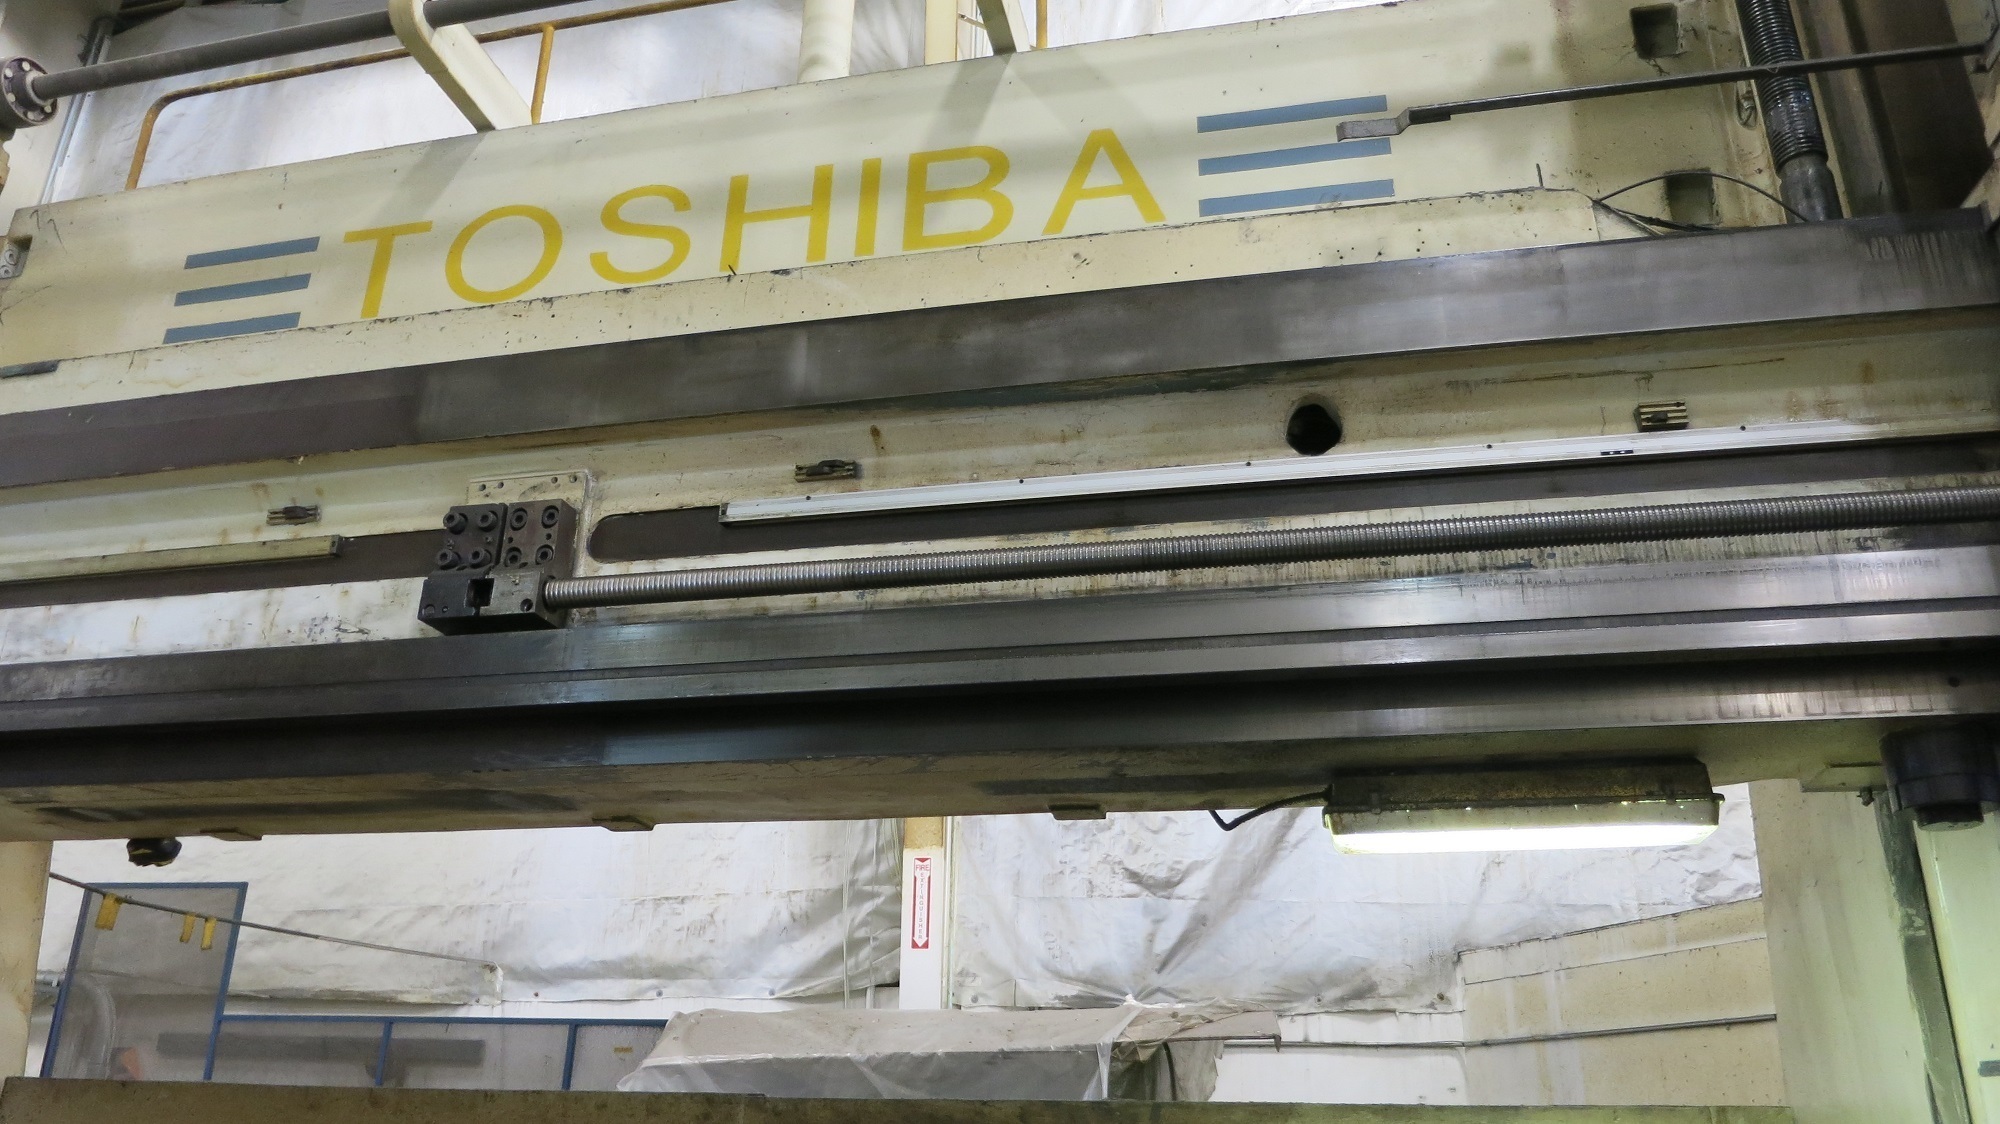 TOSHIBA SHIBAURA 141 ins Boring Mills, Vertical | EMC Leasing Company